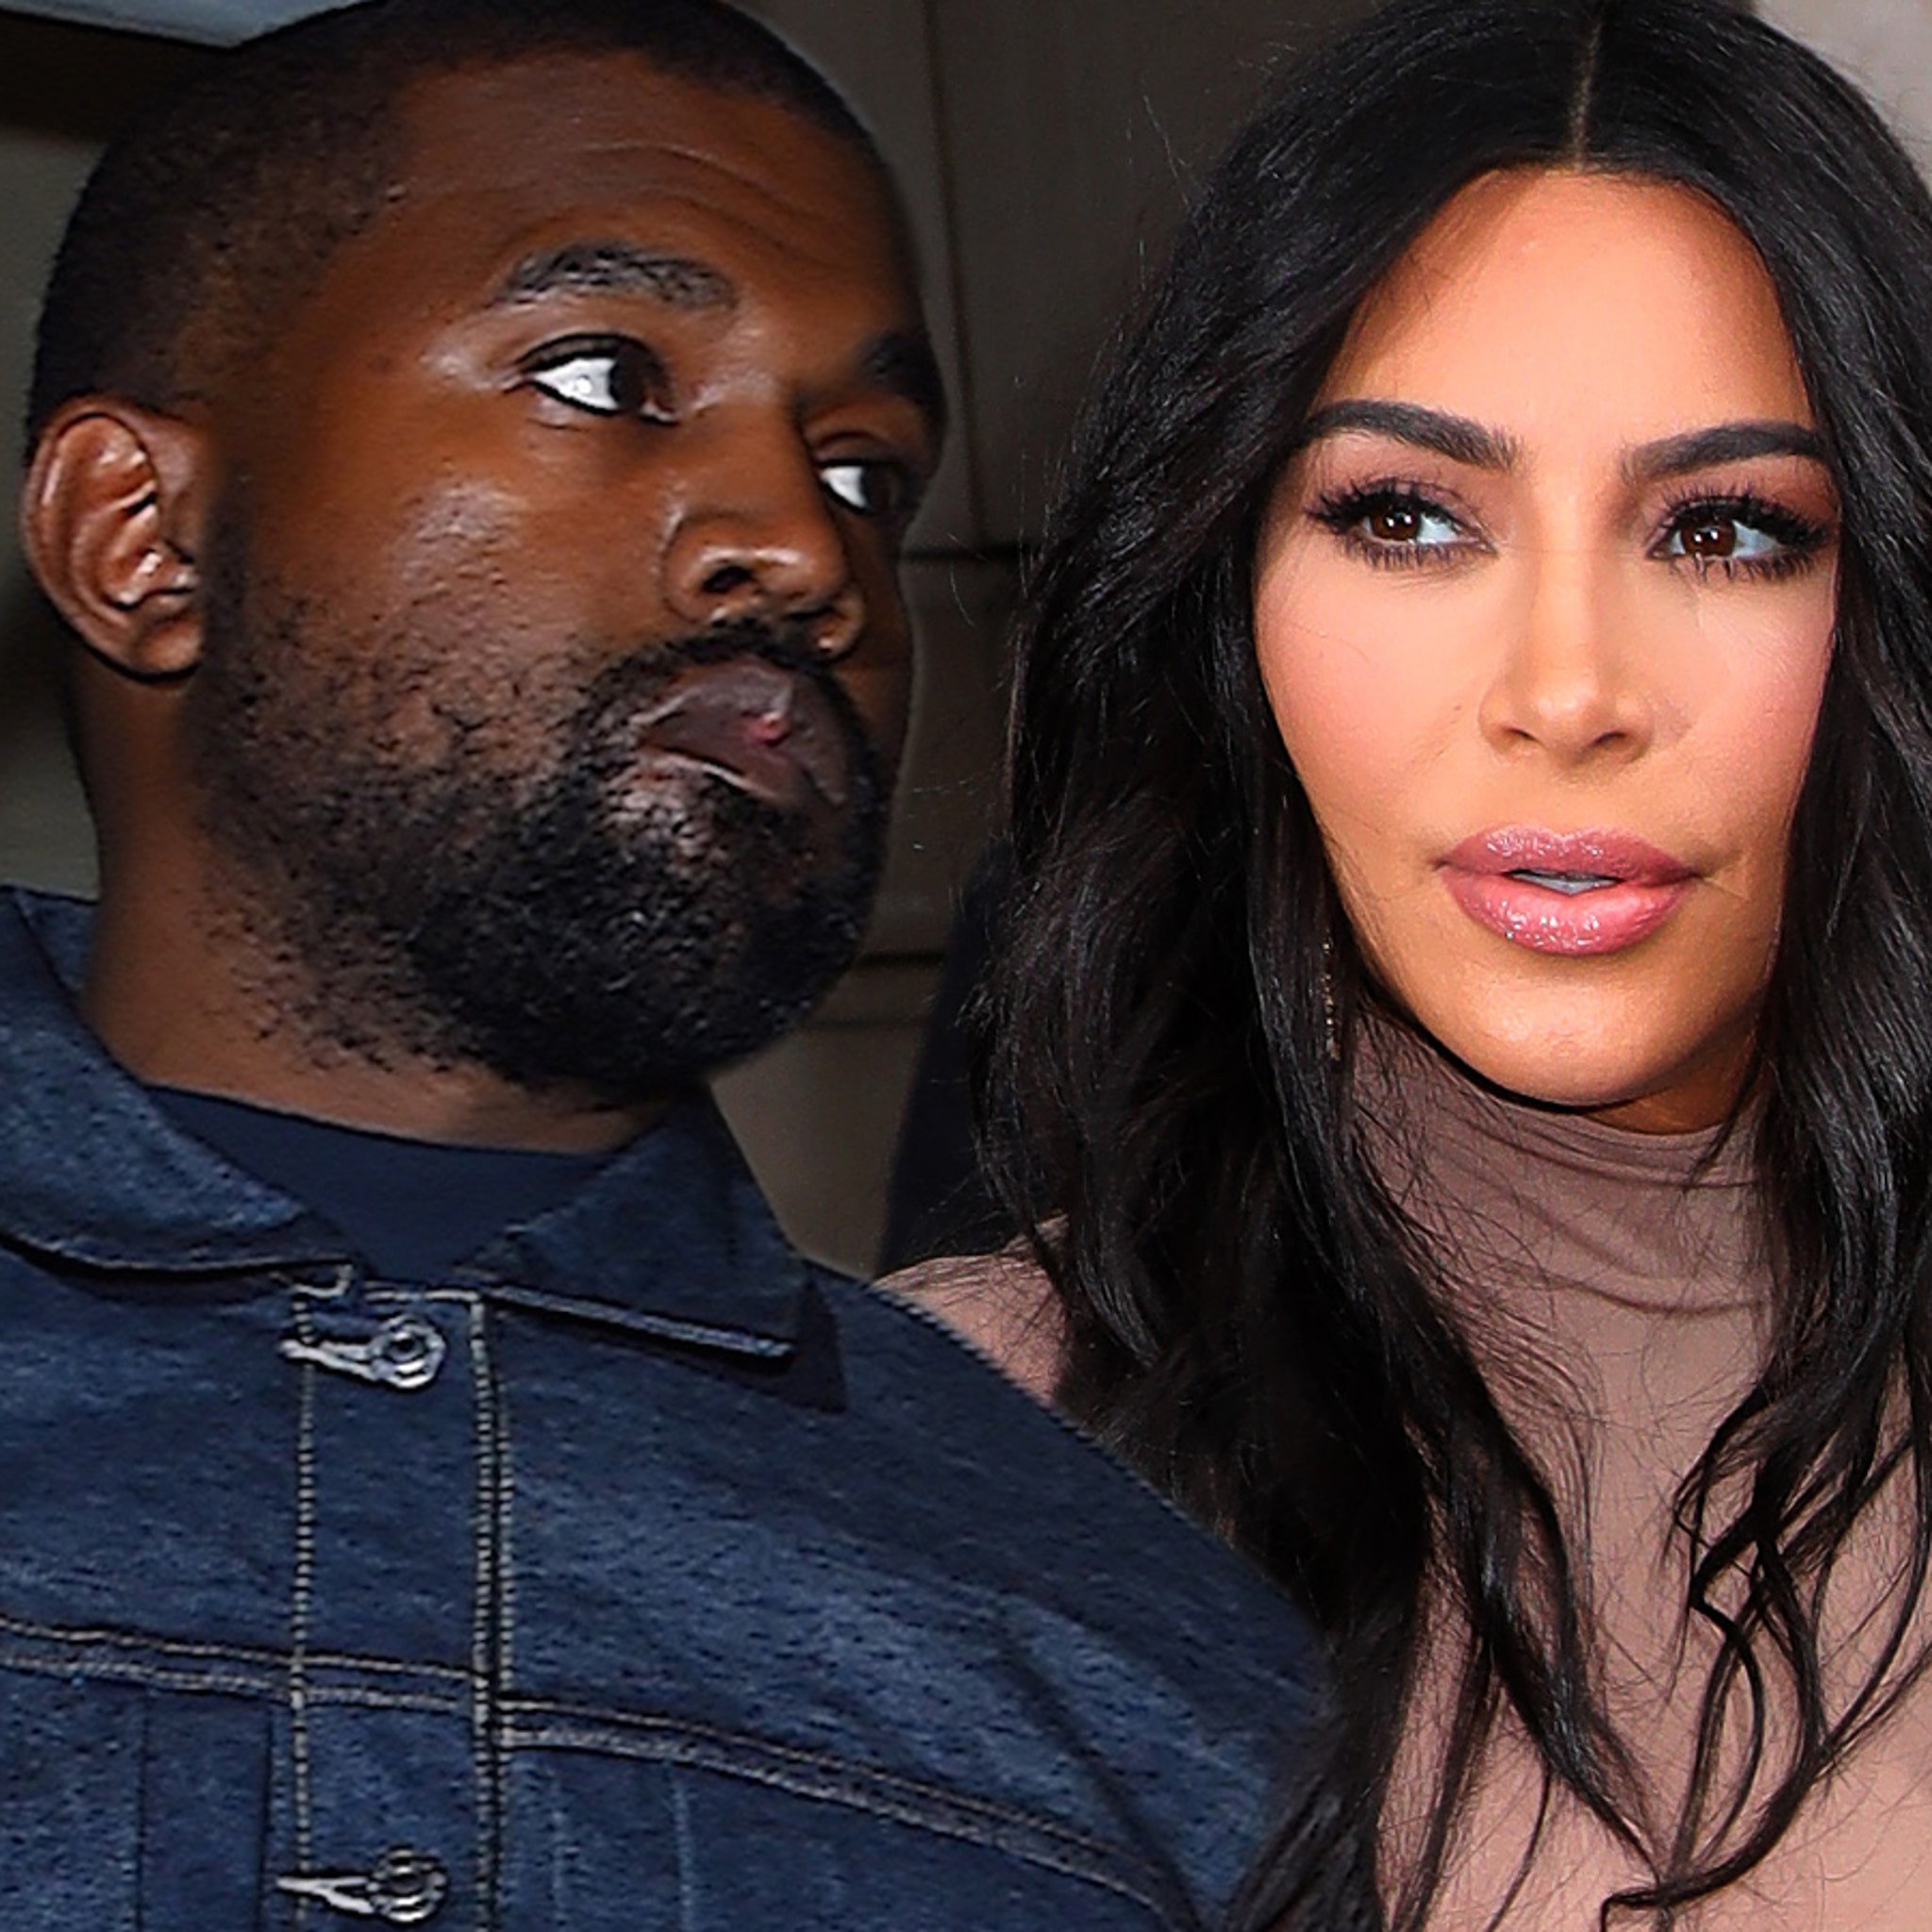 Kanye West Shades Kim Kardashian Over North West on TikTok